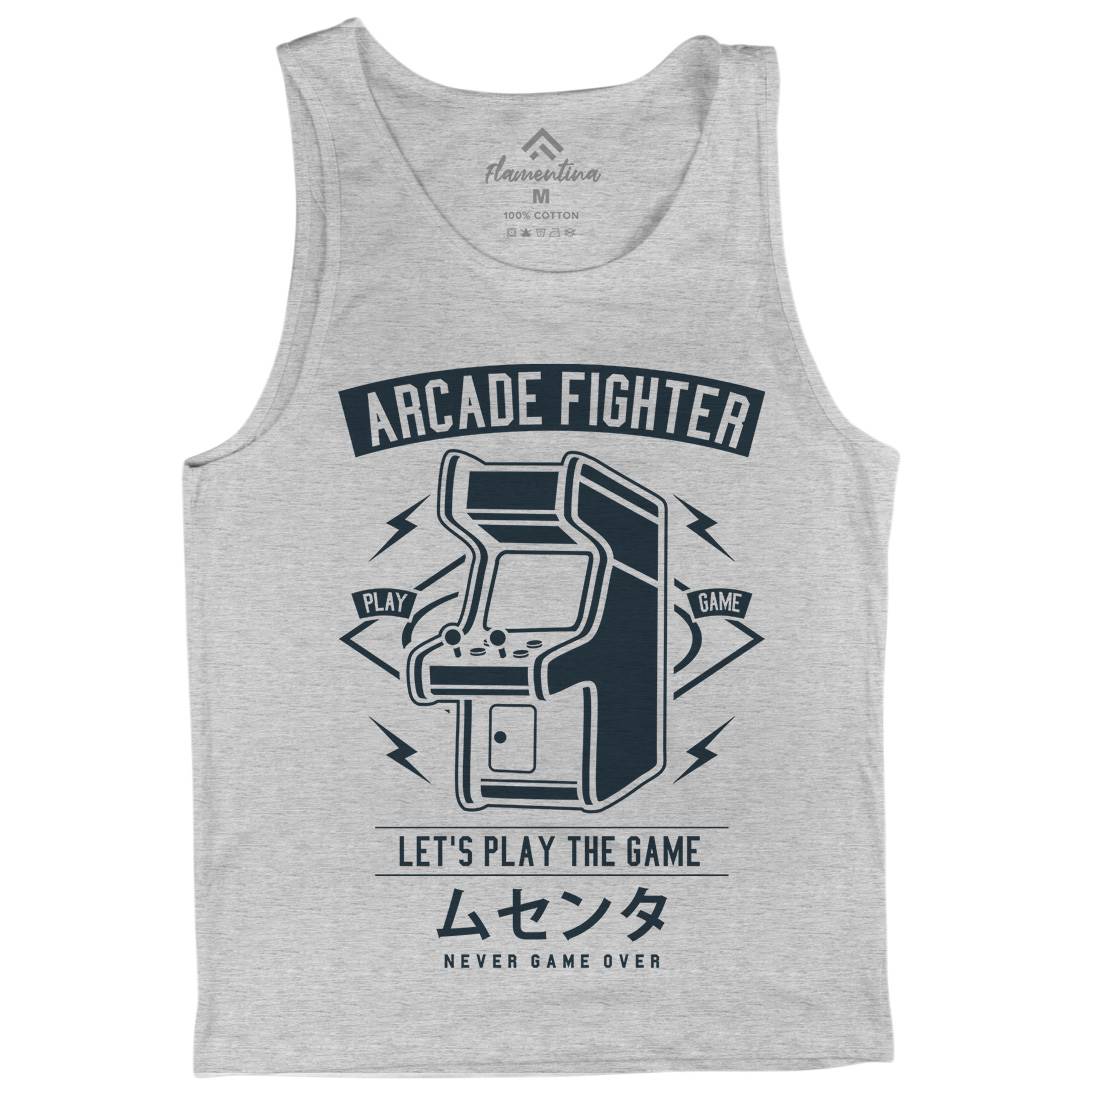 Arcade Fighter Mens Tank Top Vest Geek A201